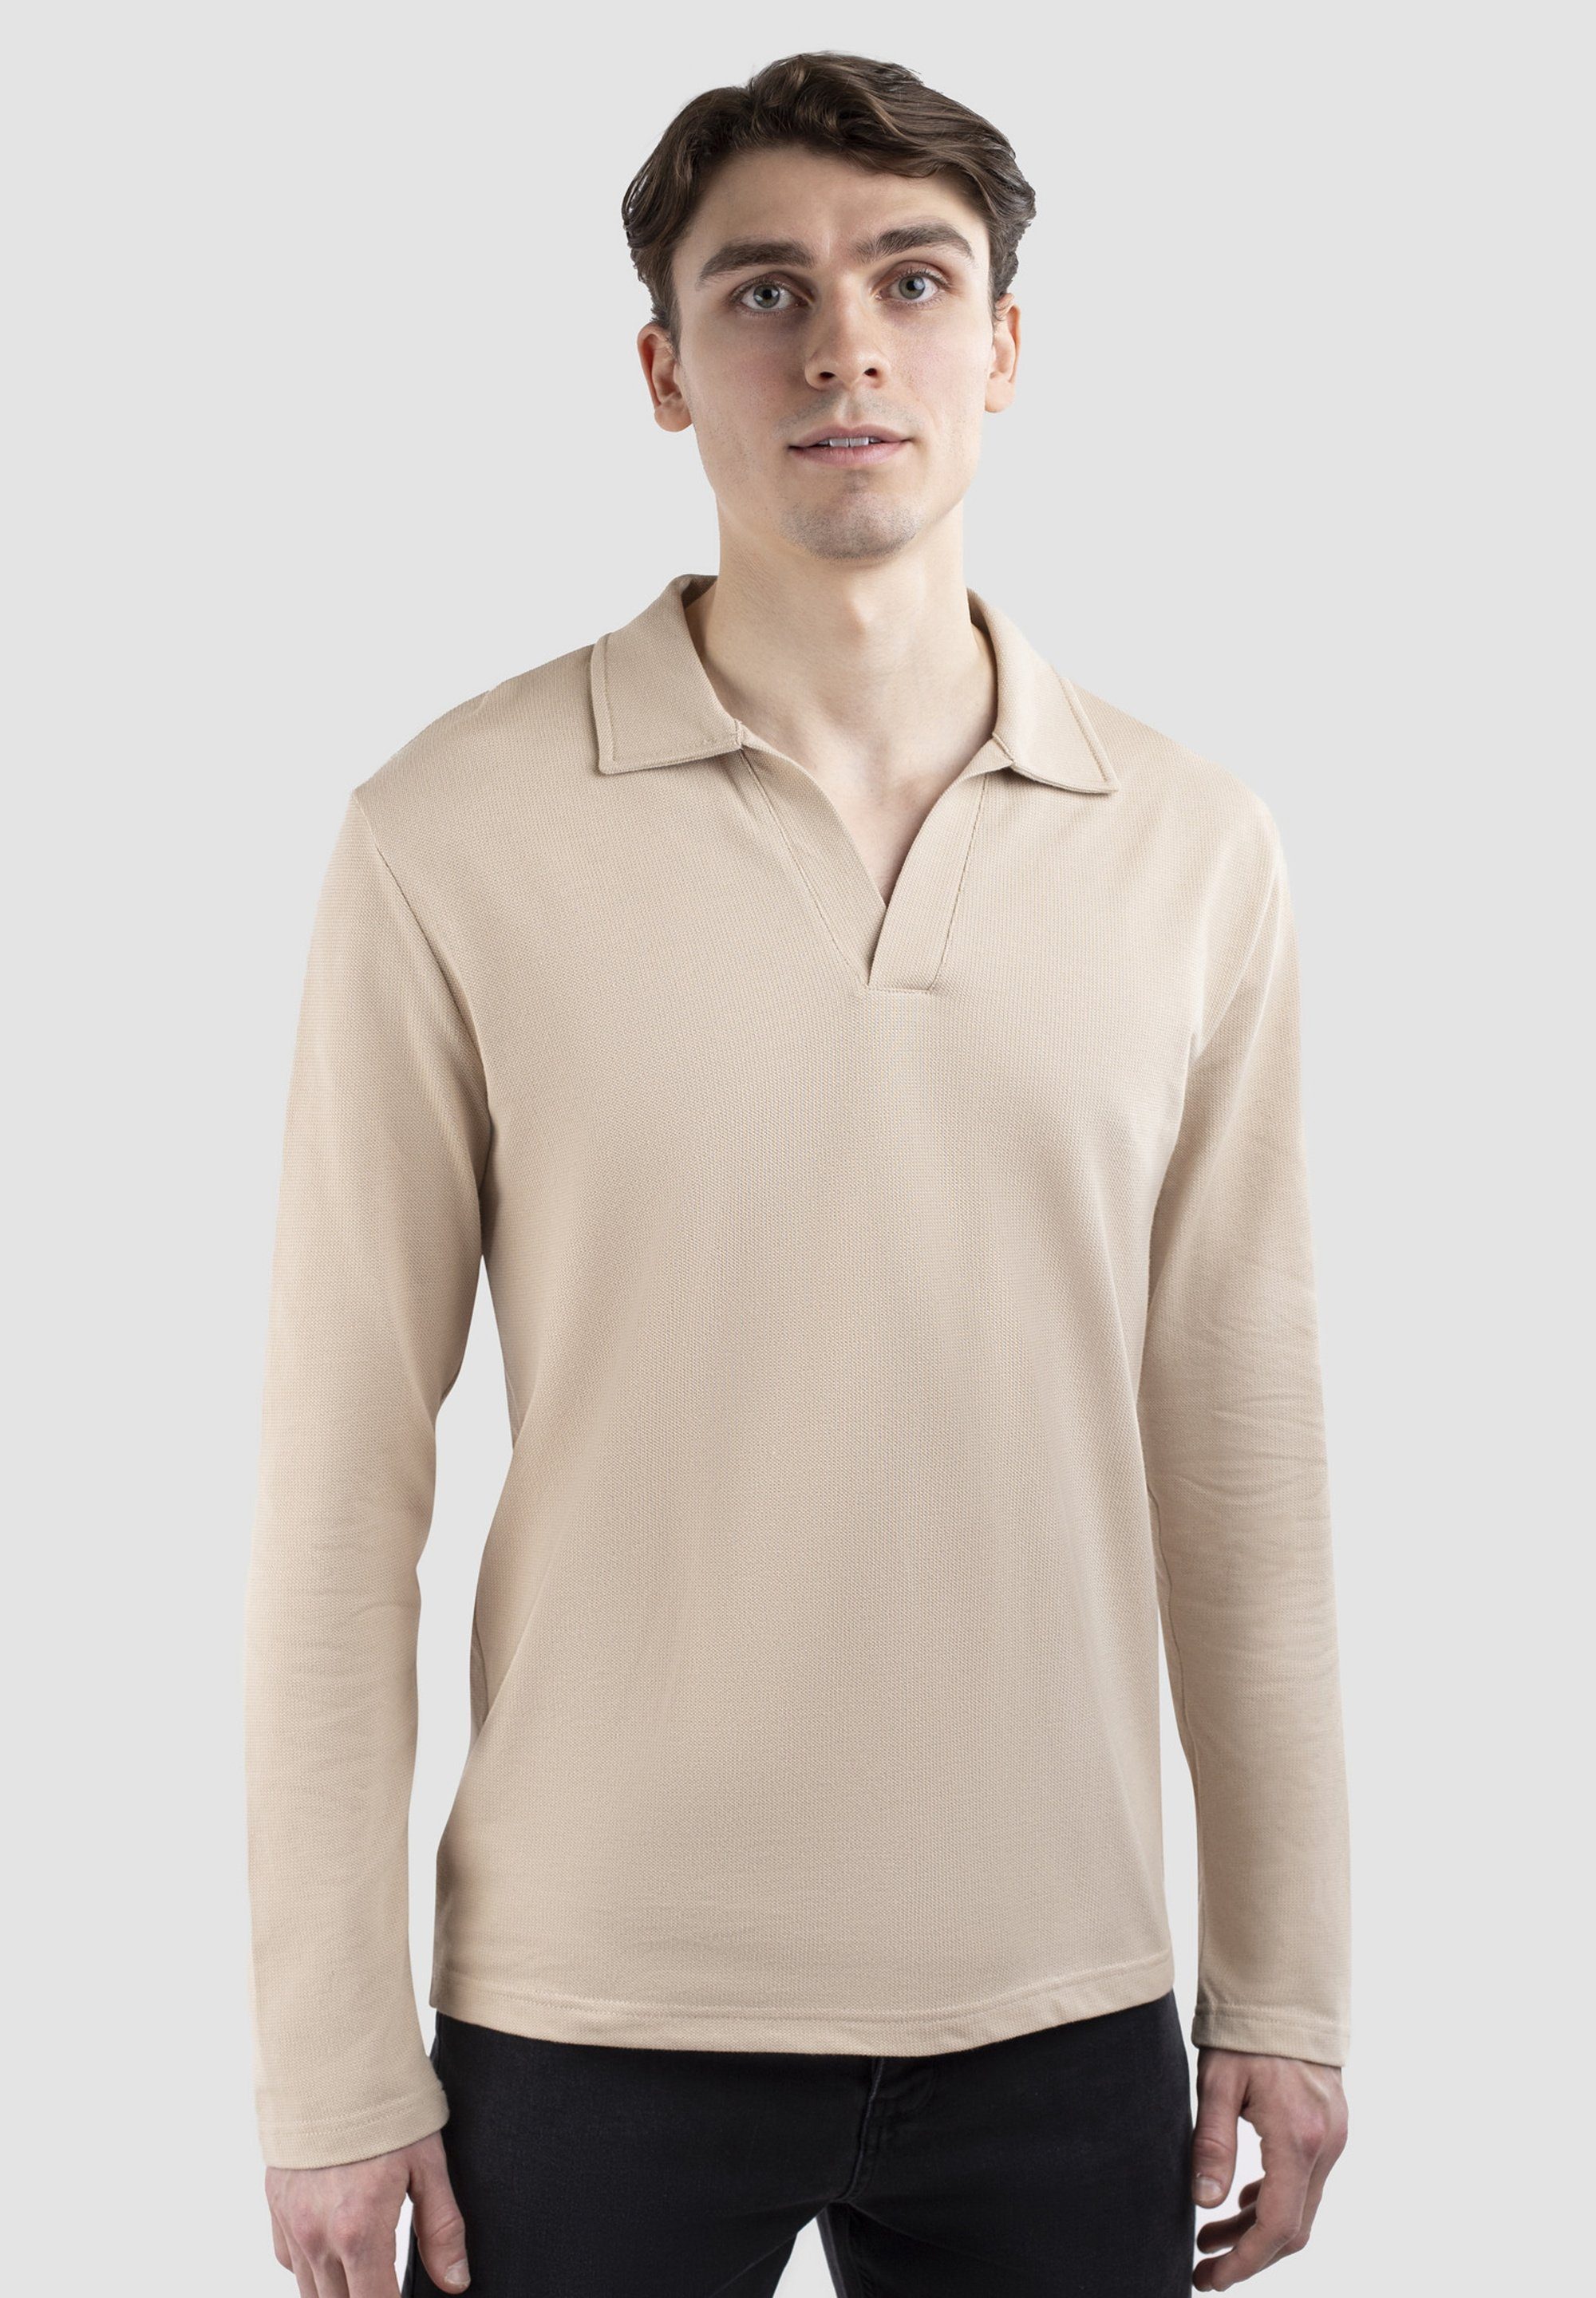 Ciszere Poloshirt Nelson collar. open Polo shirt beige with